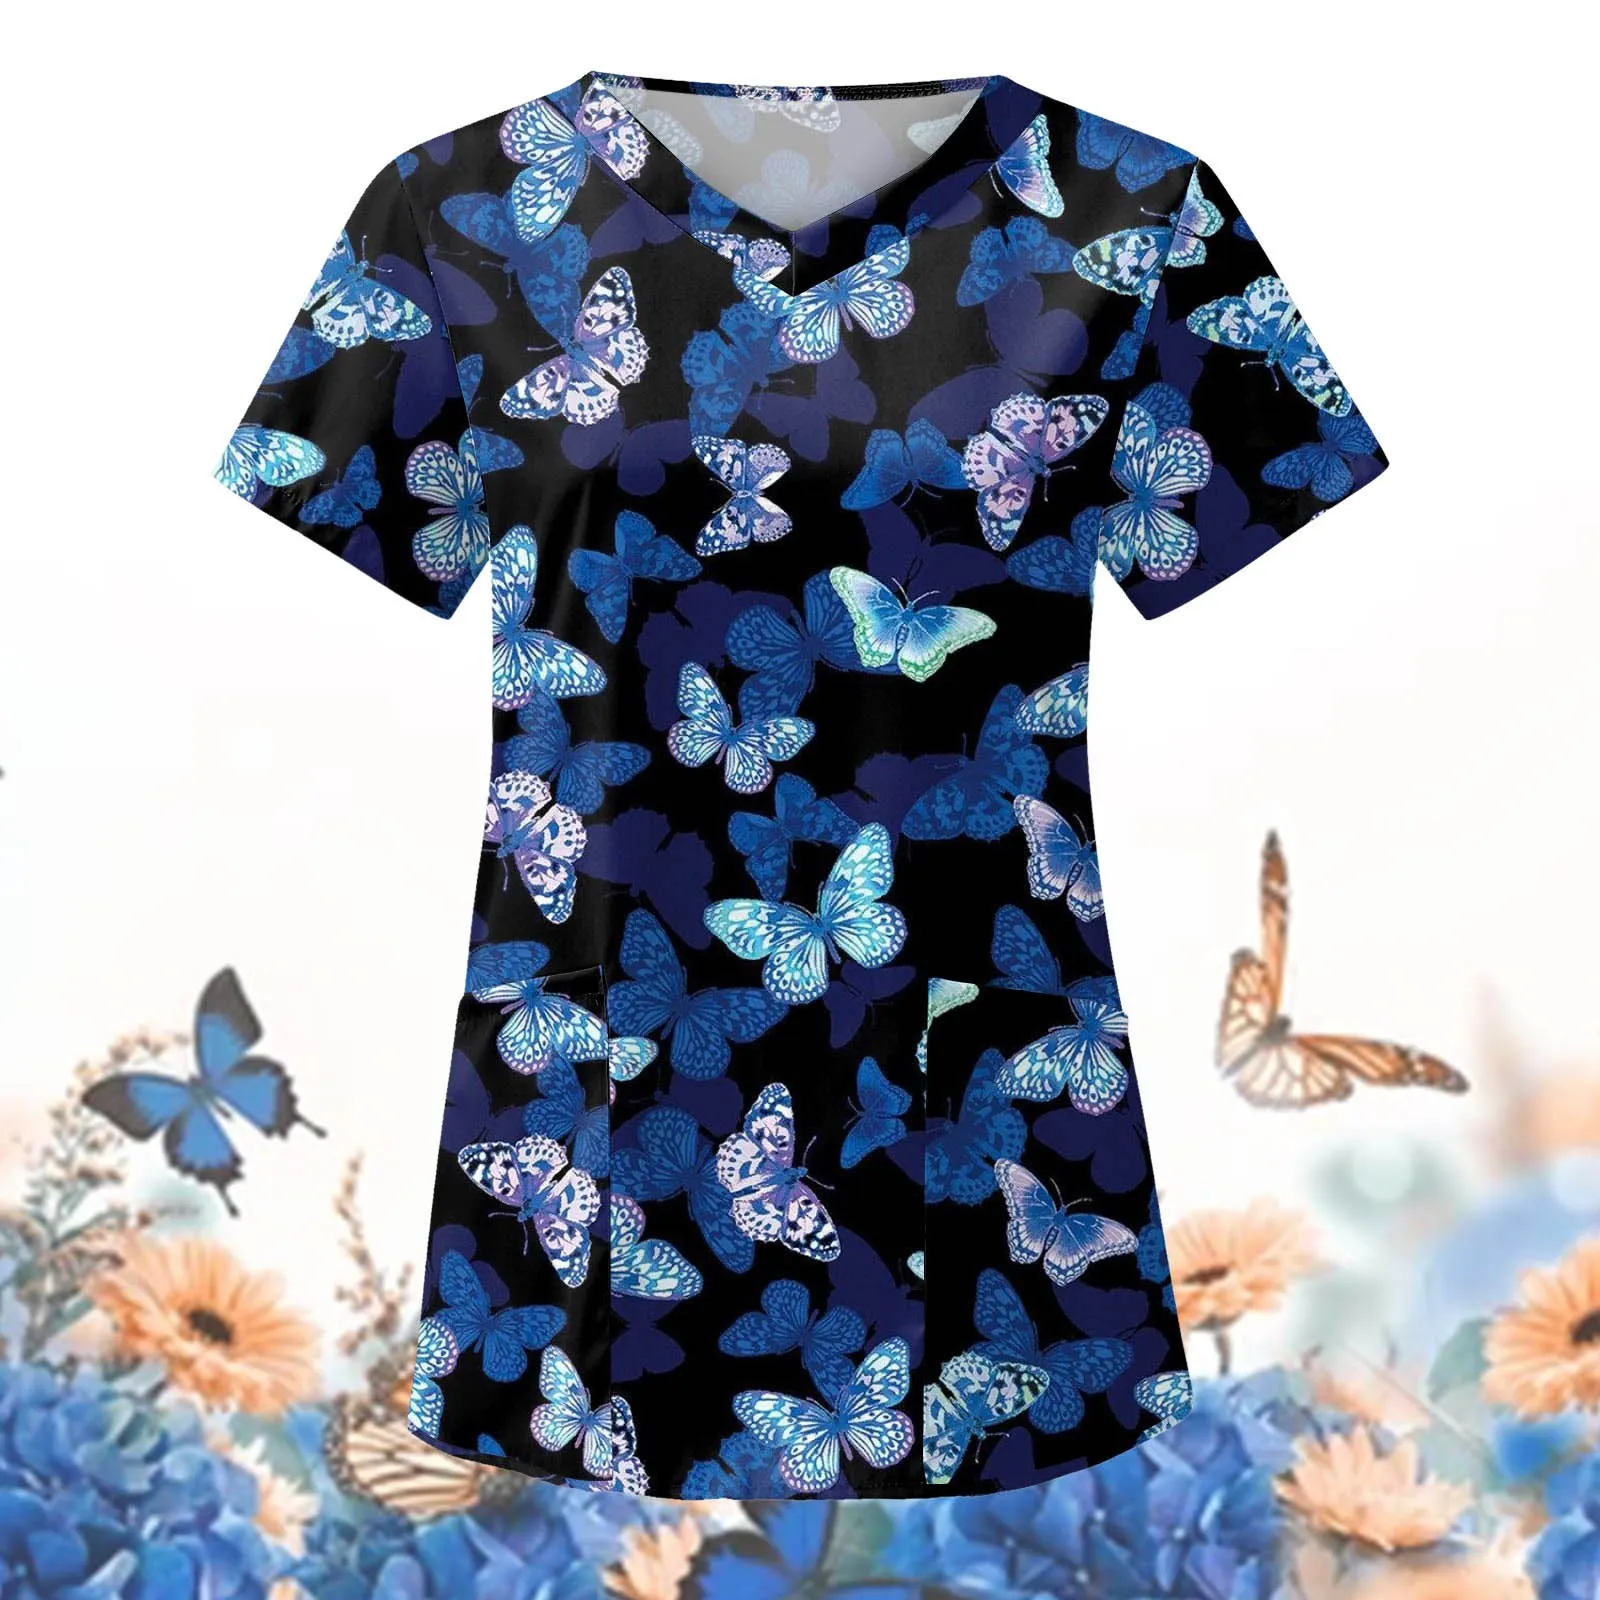 Butterfly Clinic Carer T-shirt Women Working Blouse Workwear Healthcare Medical Nursing Nurse Hospital Uniform Tops ShortSleeve